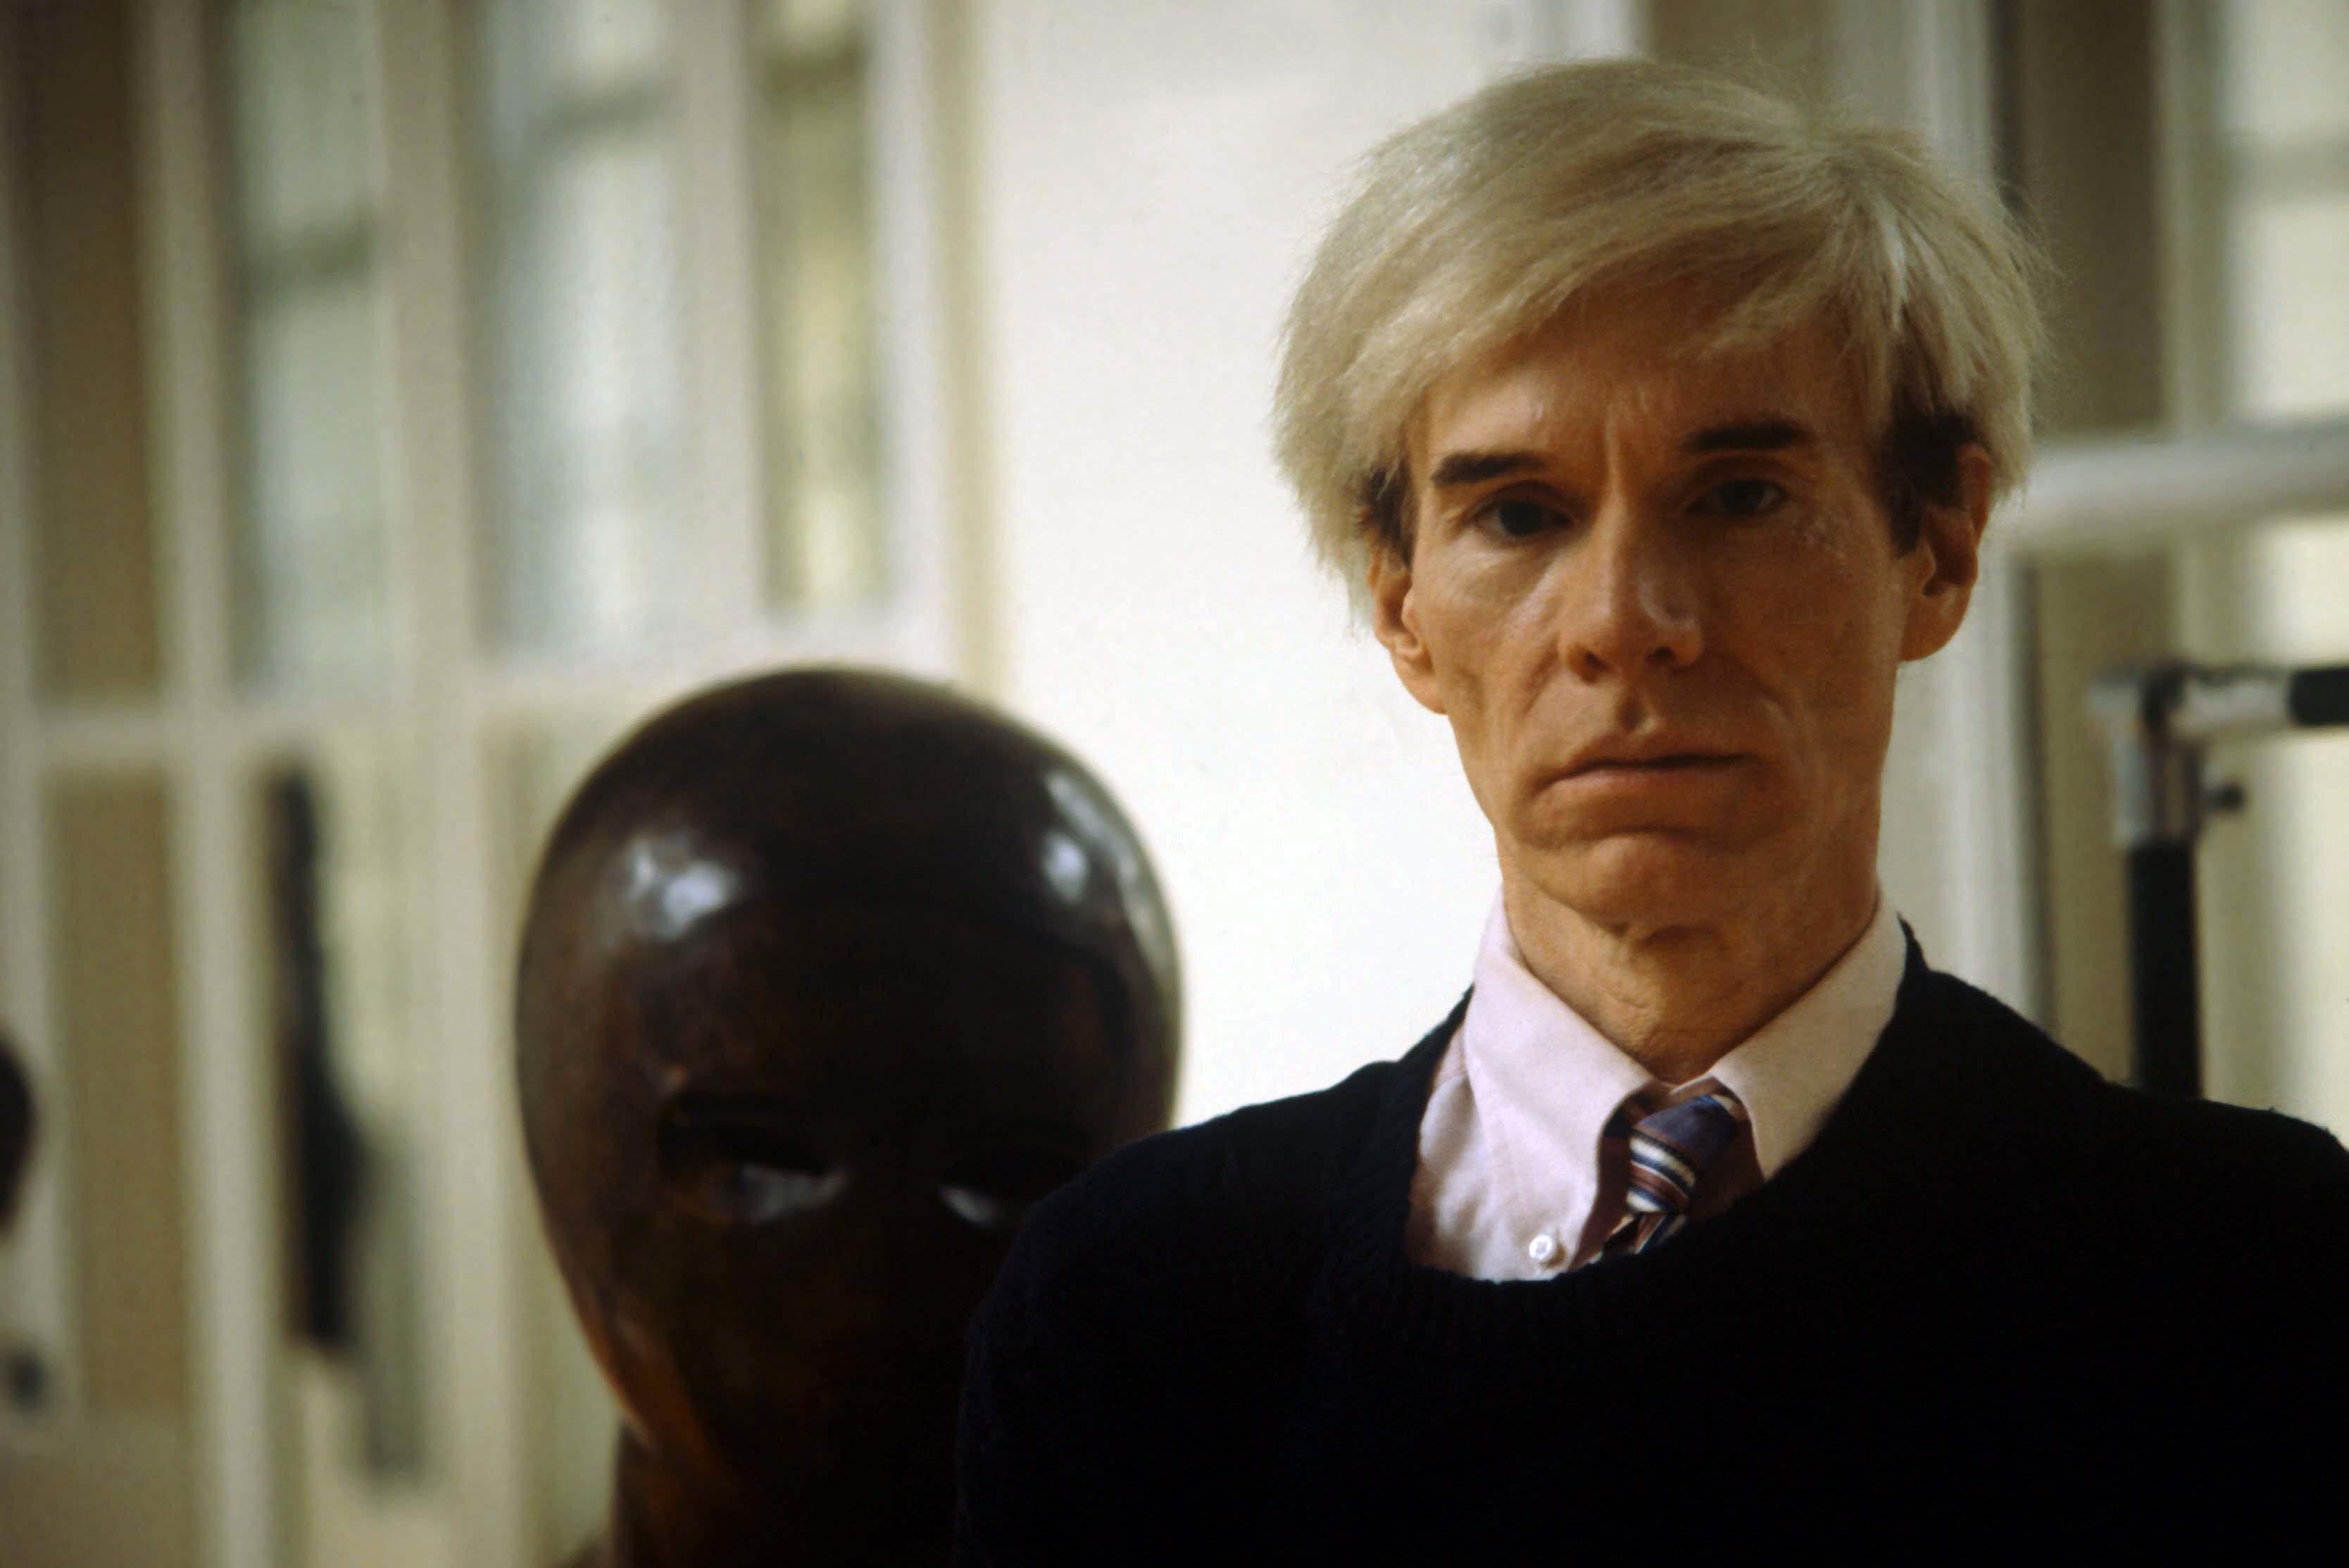 Portrait du peintre américain Andy Warhol en 1986 [Farabola/Leemage - Oliosi]